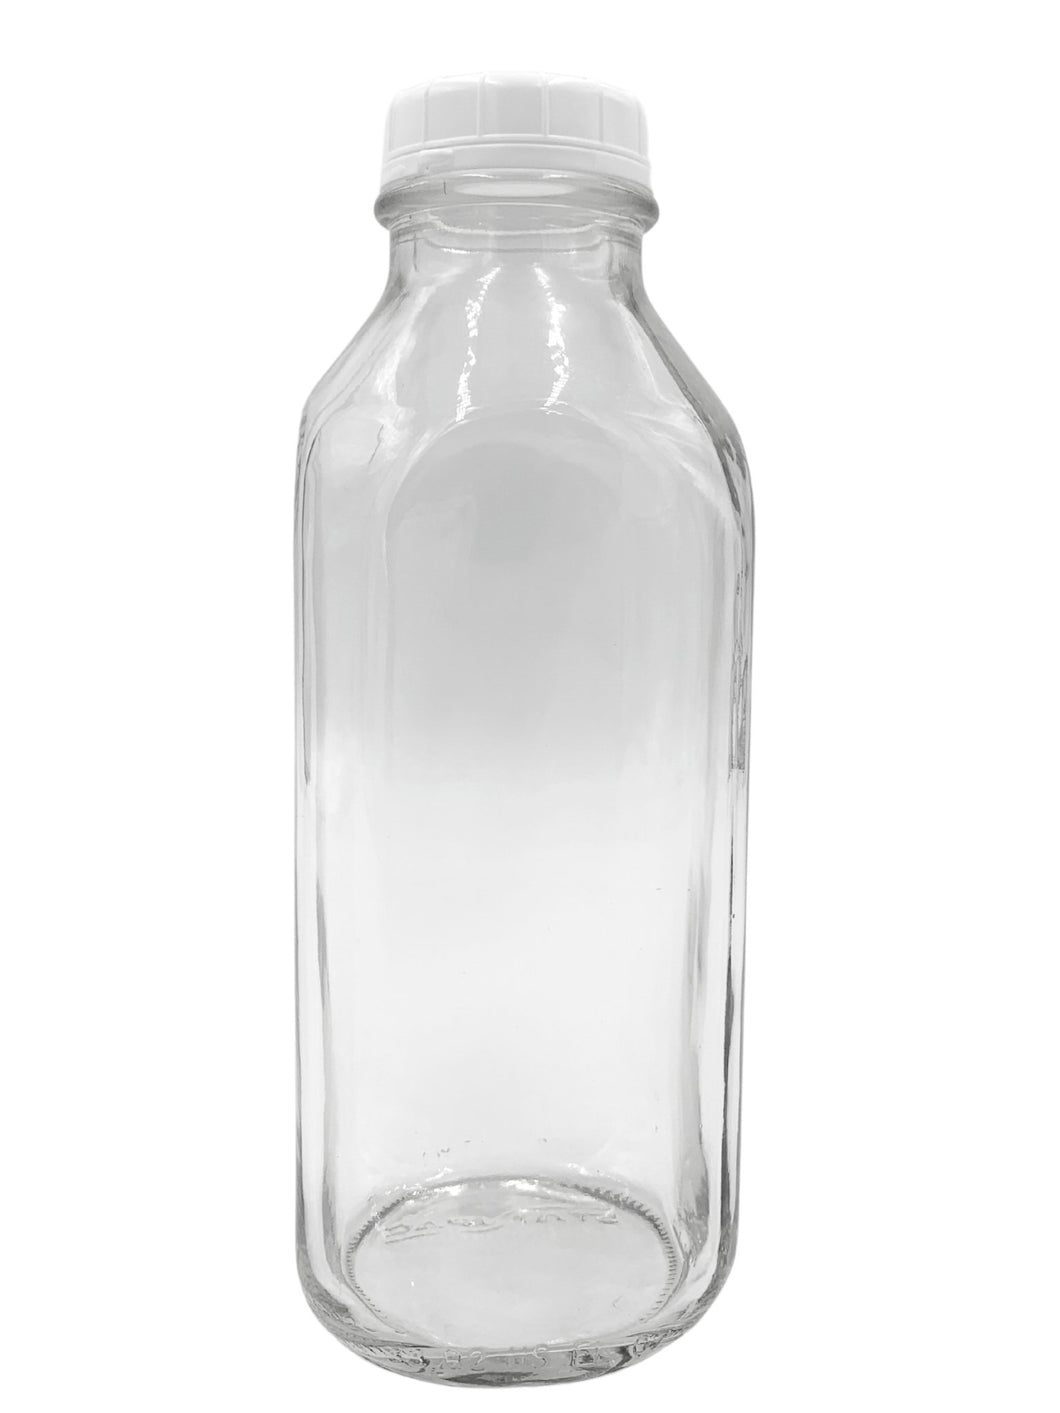 12 Clear 12 oz Square Storage Jars Refillable Glass Bottles